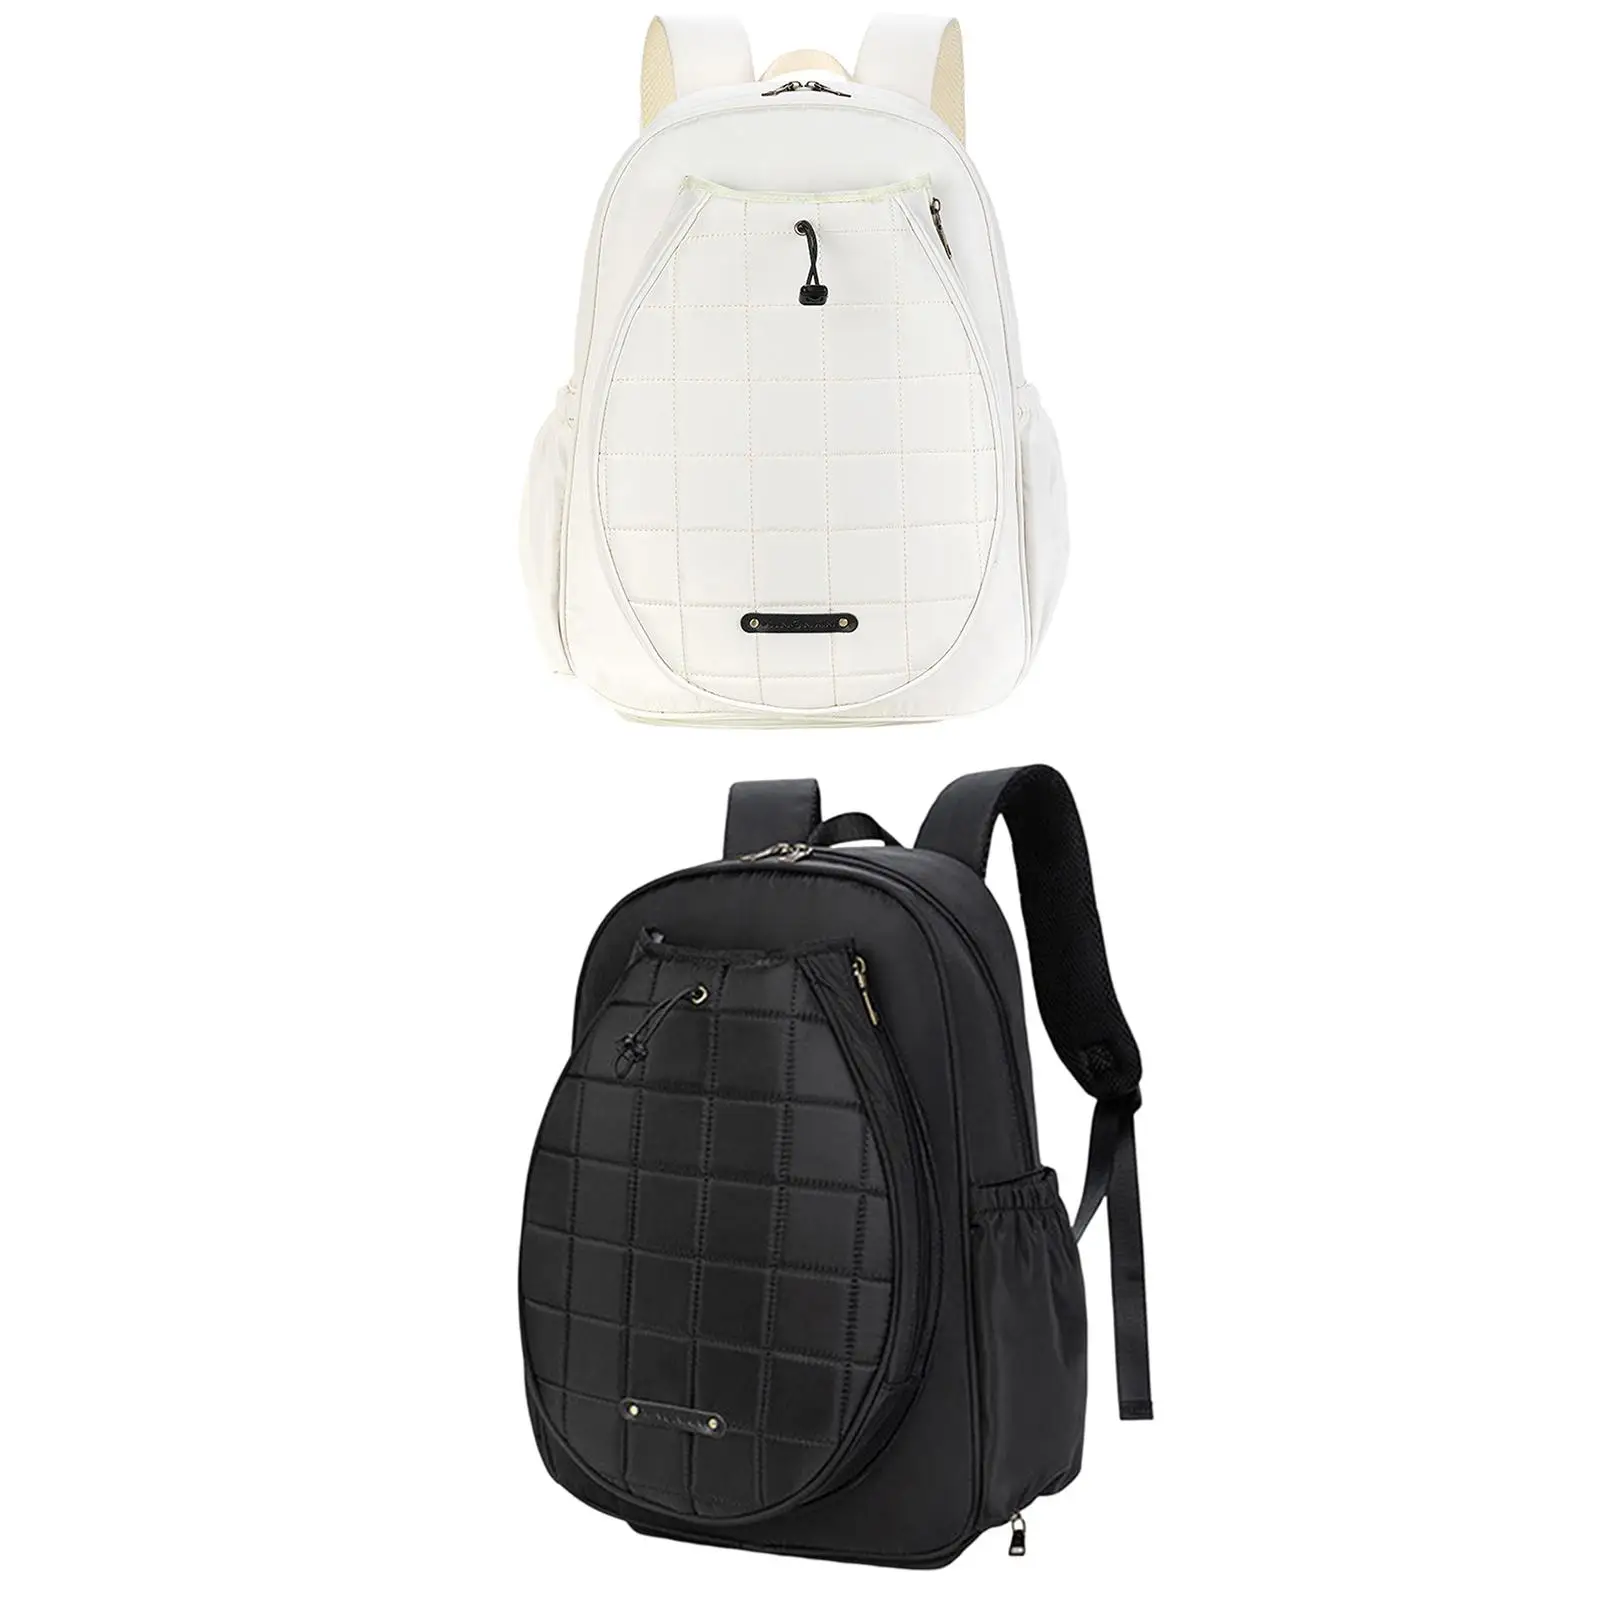 Tennis Backpack Tennis Bag Portable Outdoor Sport Bag Tennis Racket Bag Racket Holder for Badminton Racquet Pickleball Paddles